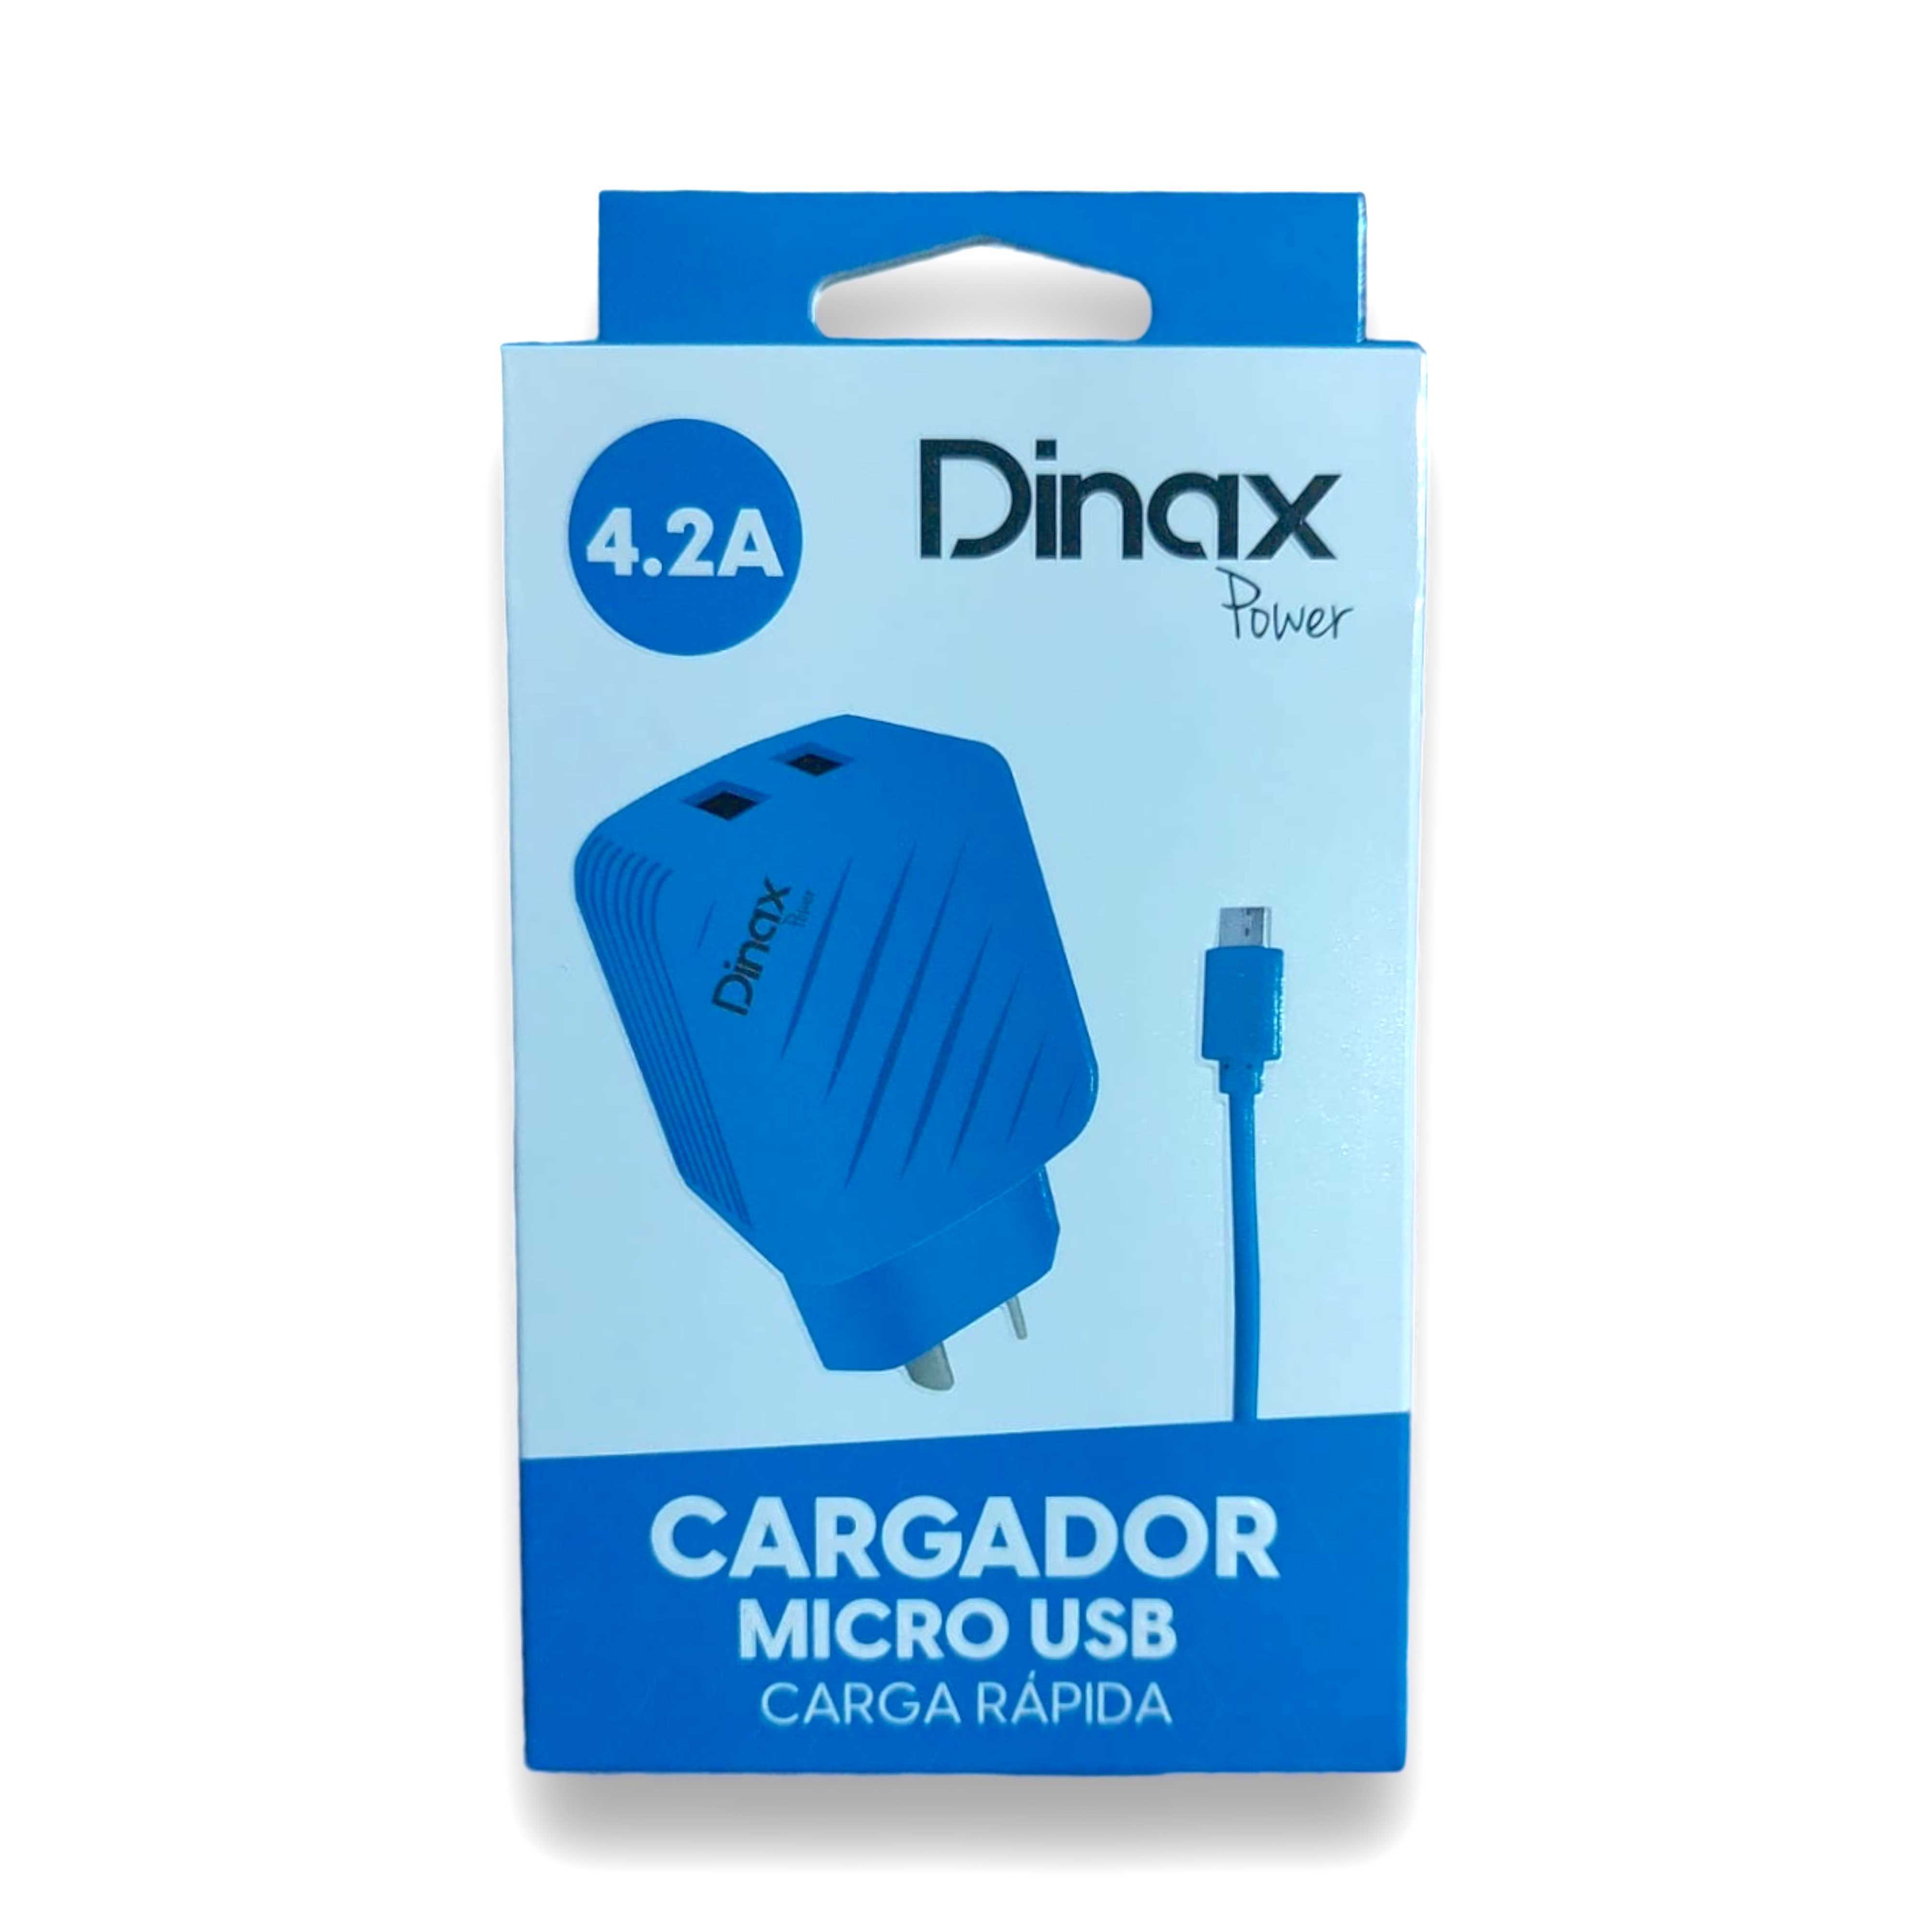 Cargador Samsung 35w kit USB/TIPO C carga rápida, incluye cable USB-C